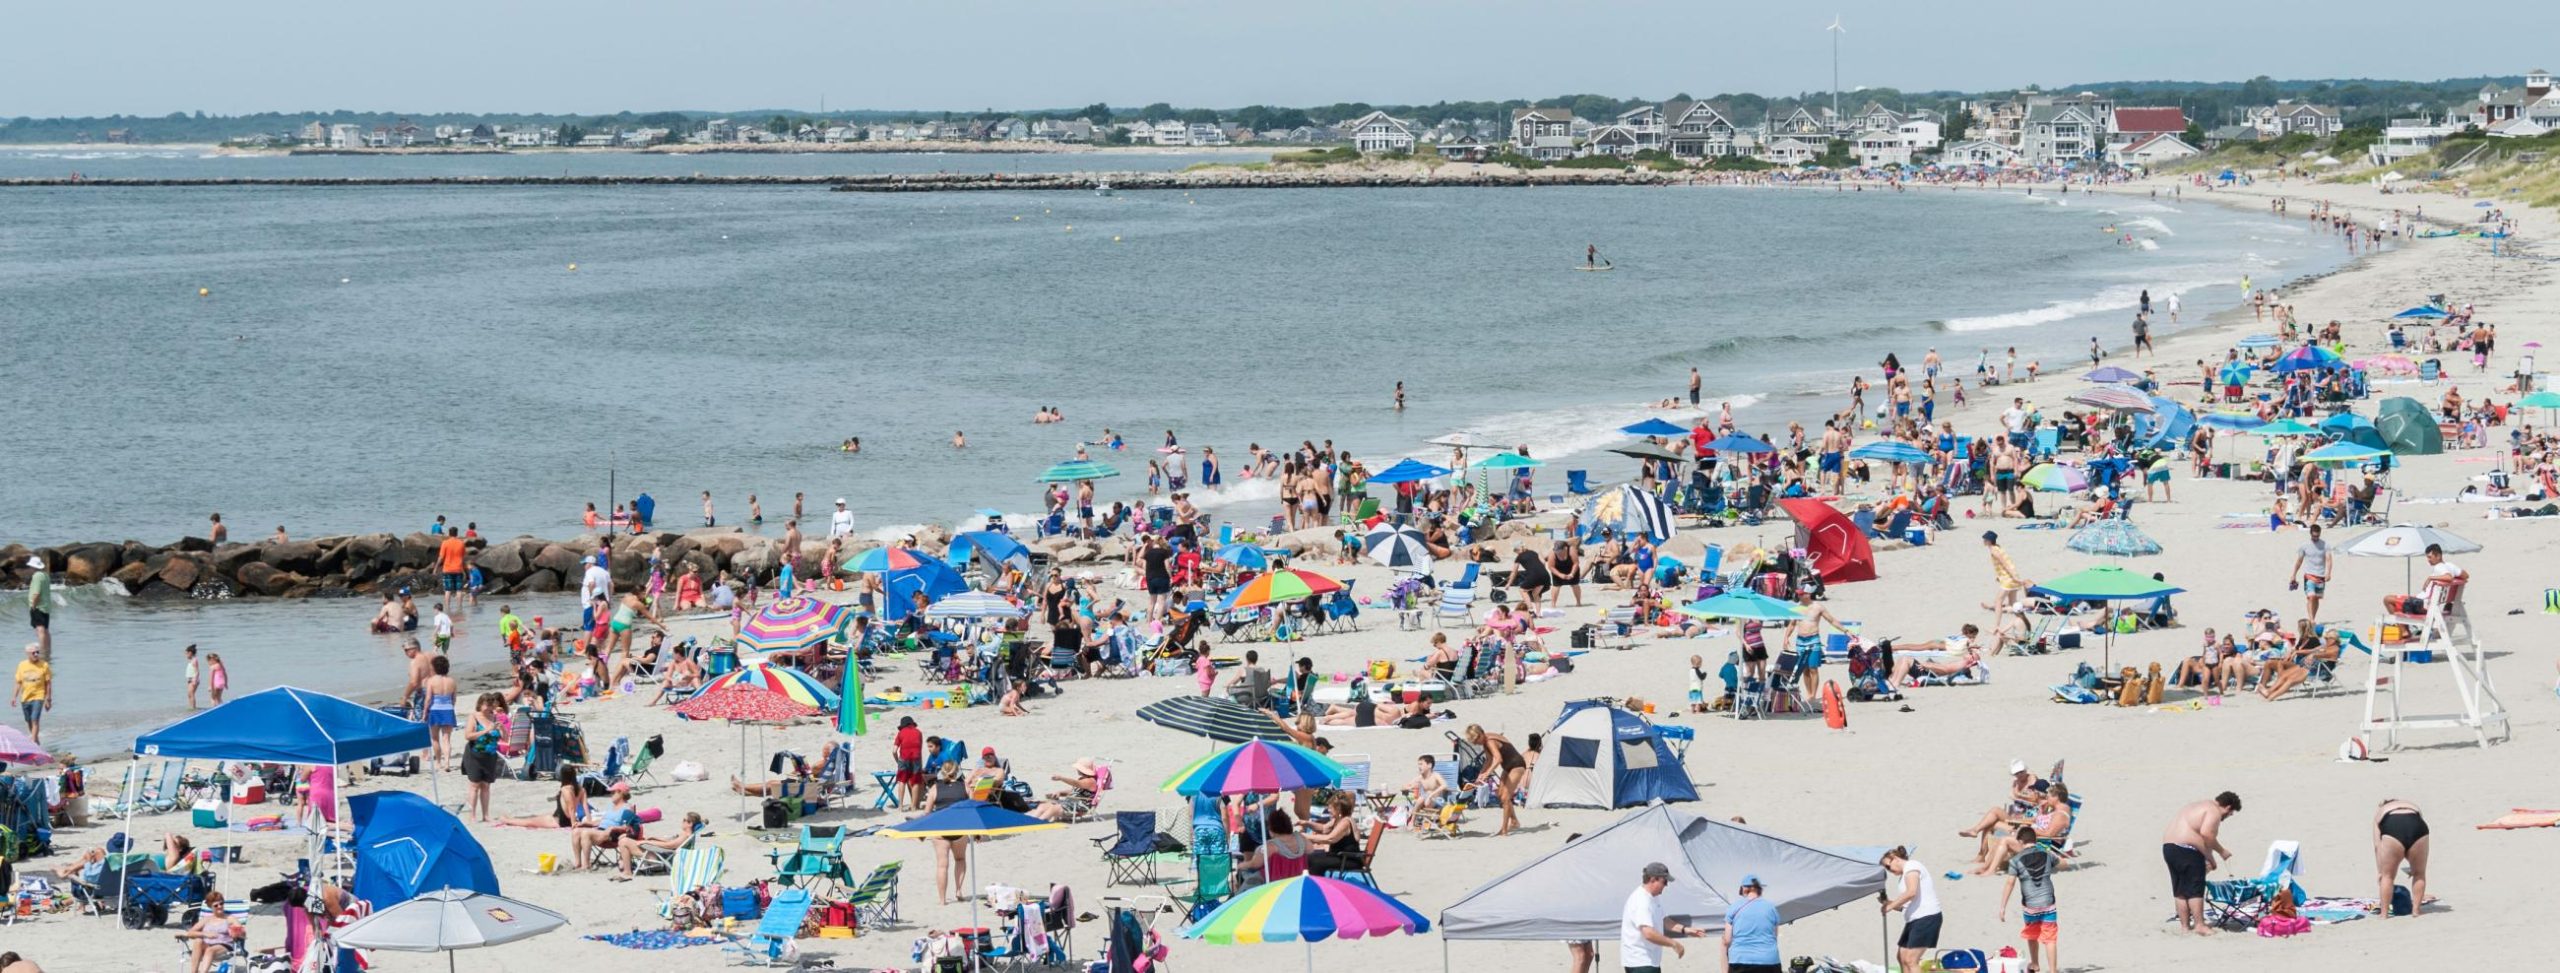 Families enjoying Rhode Island beaches